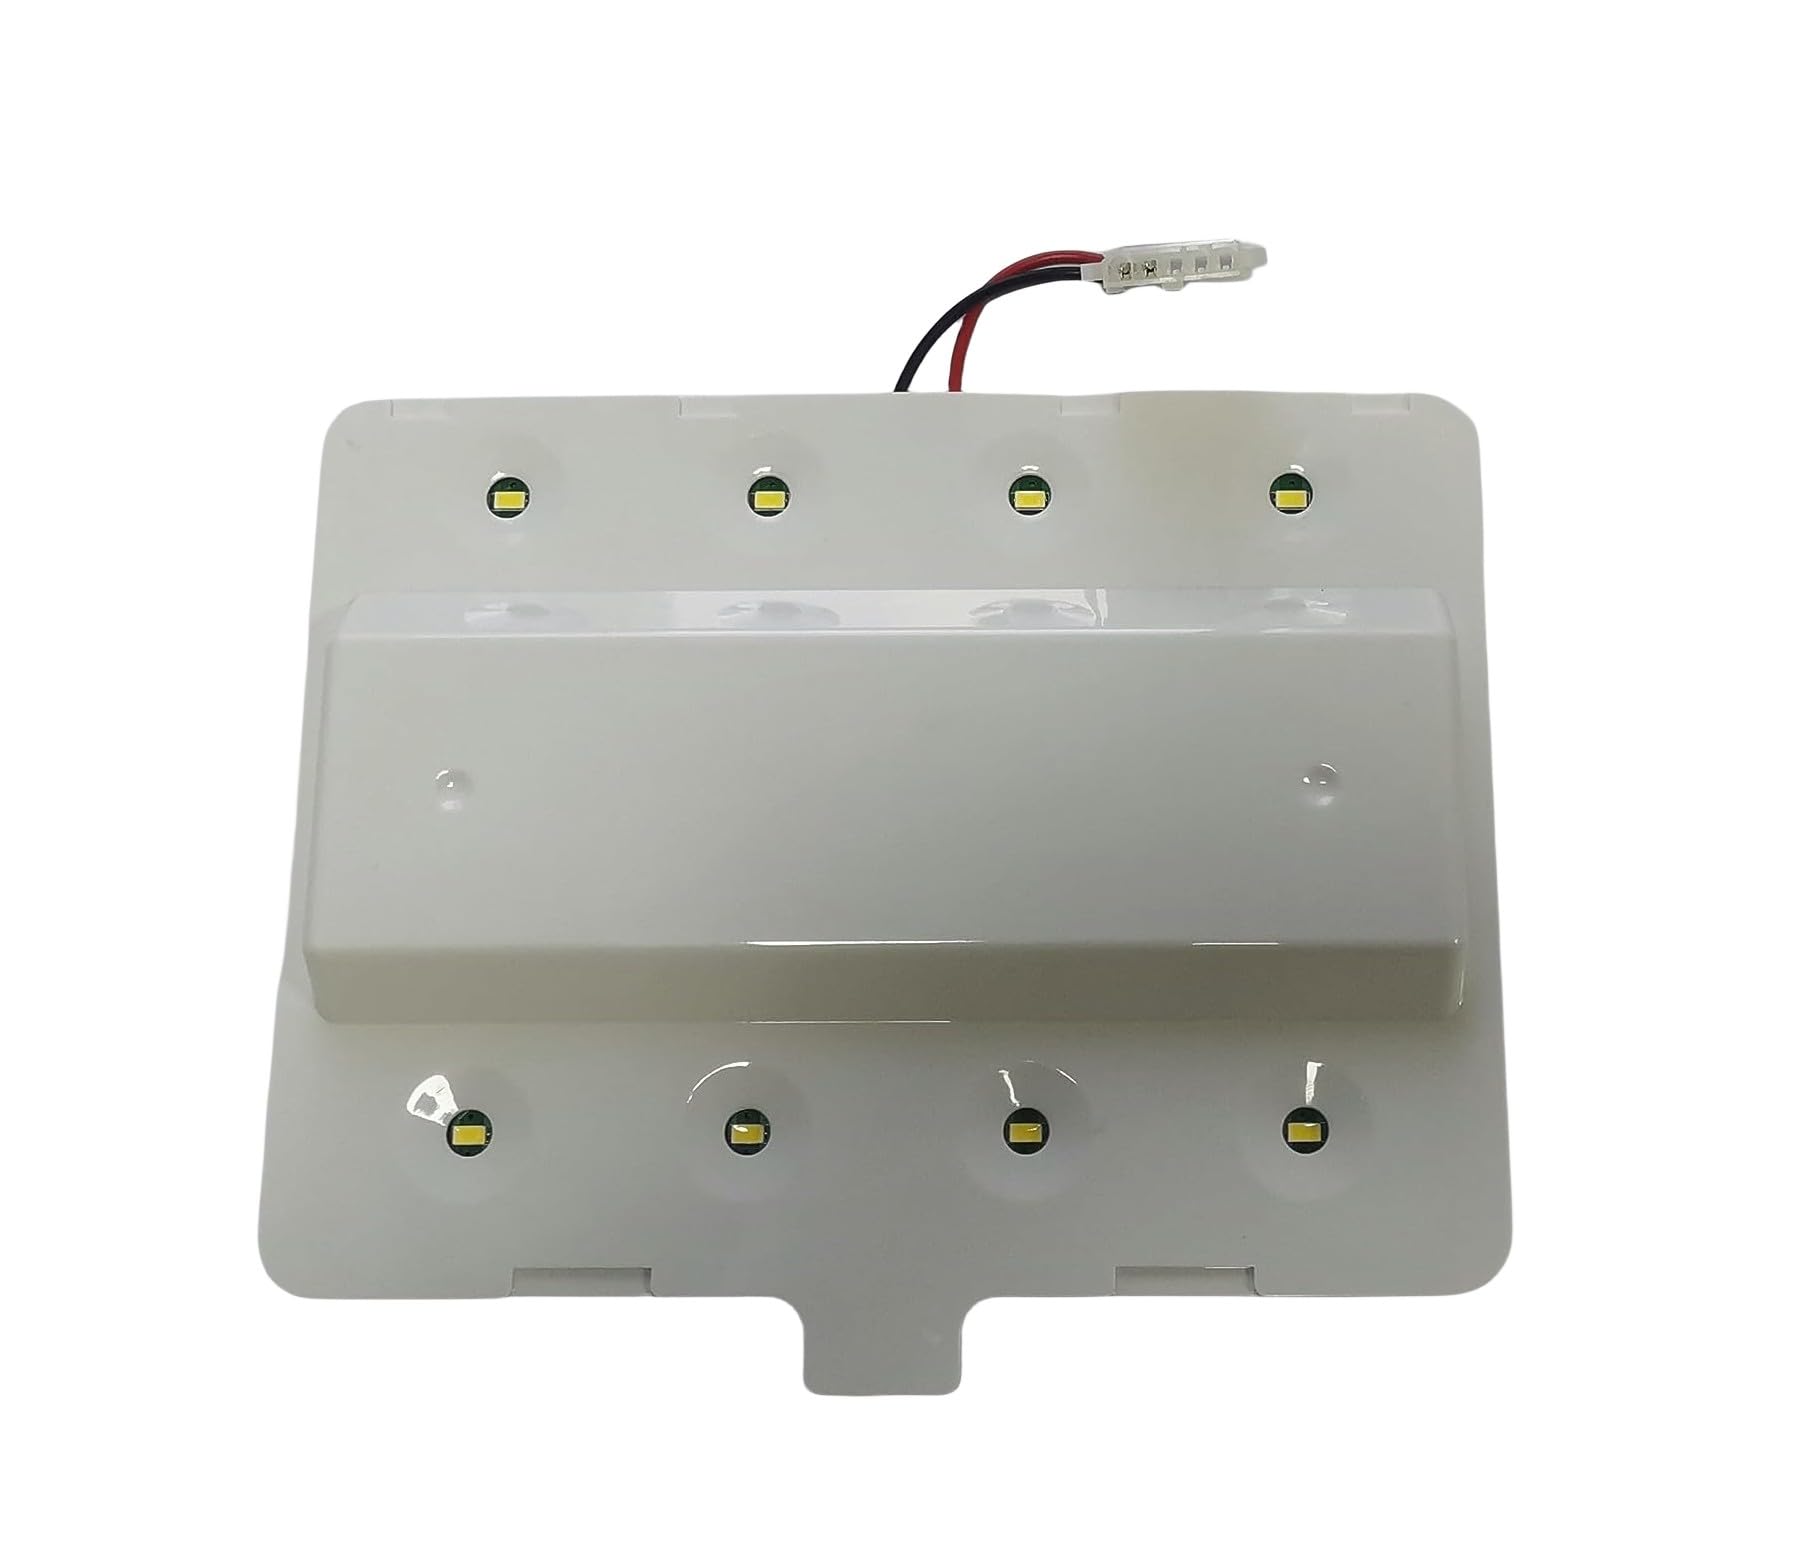 W11043011 Refrigerator led light module fits for Whirlpool Kenmore Maytag Fridge led light W10866538 AP6047972 PS12070396 EQ8028 -White Light